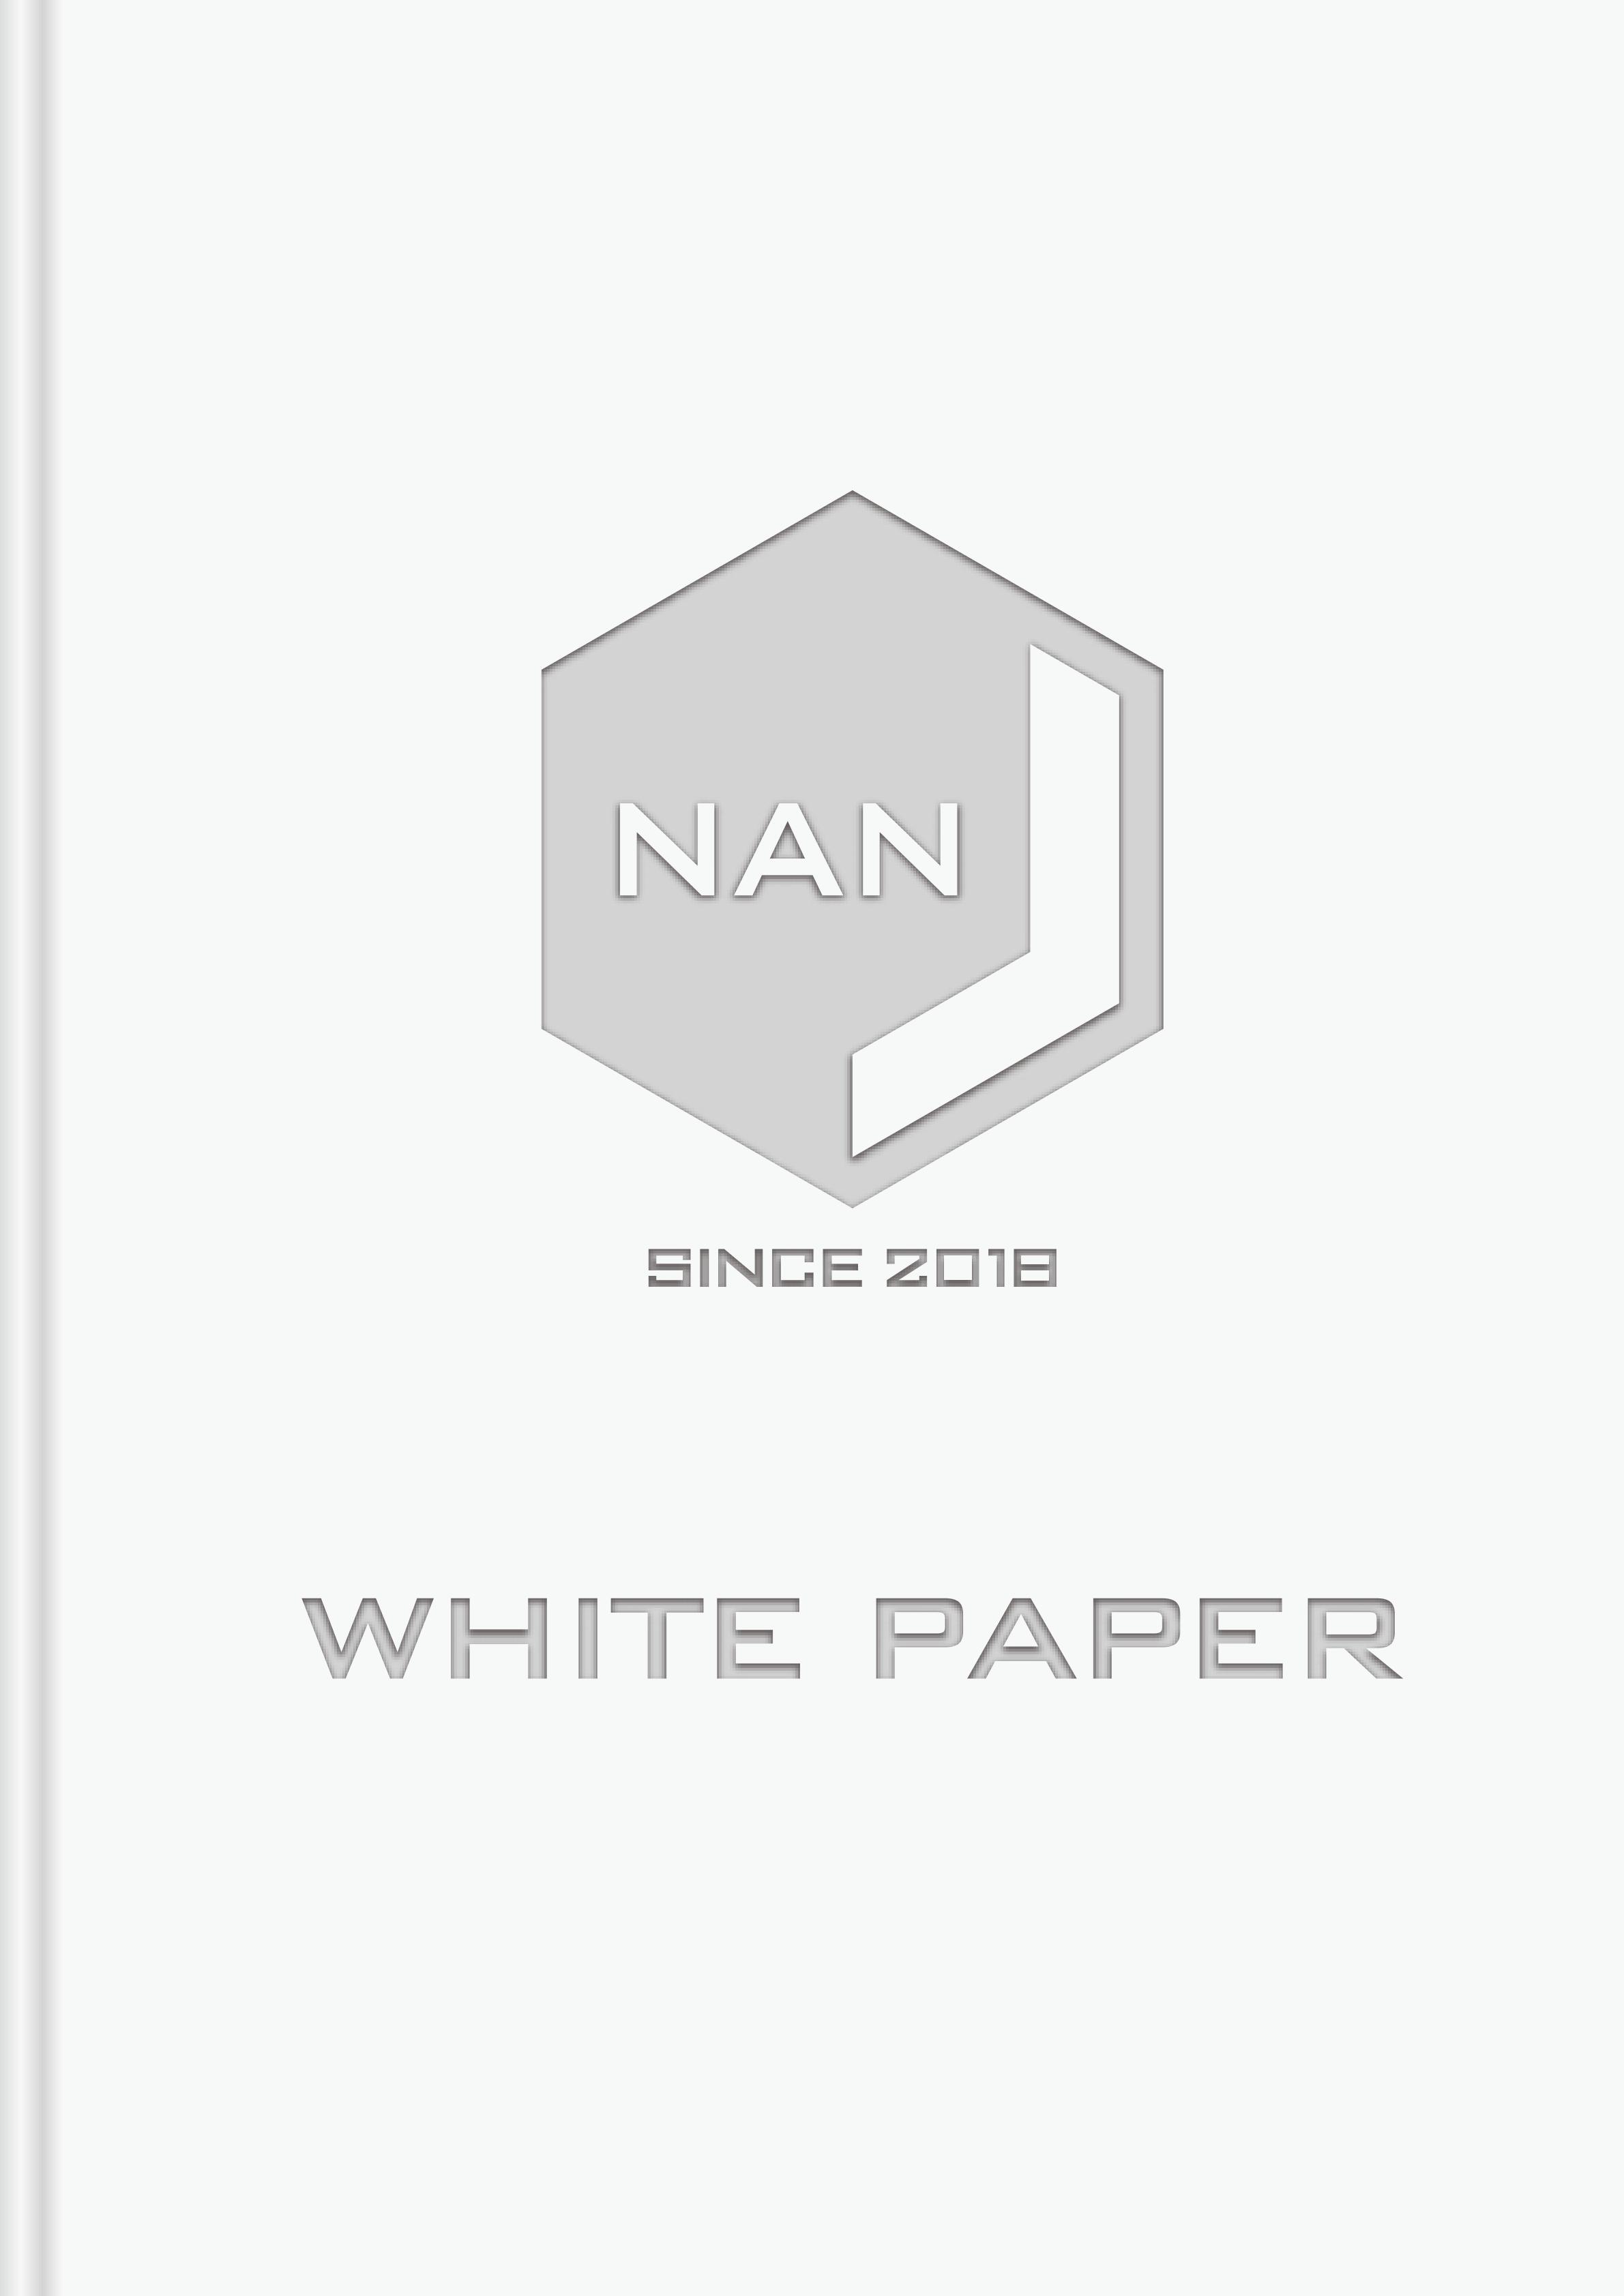 NANJ_white_paper_jp_00.jpg